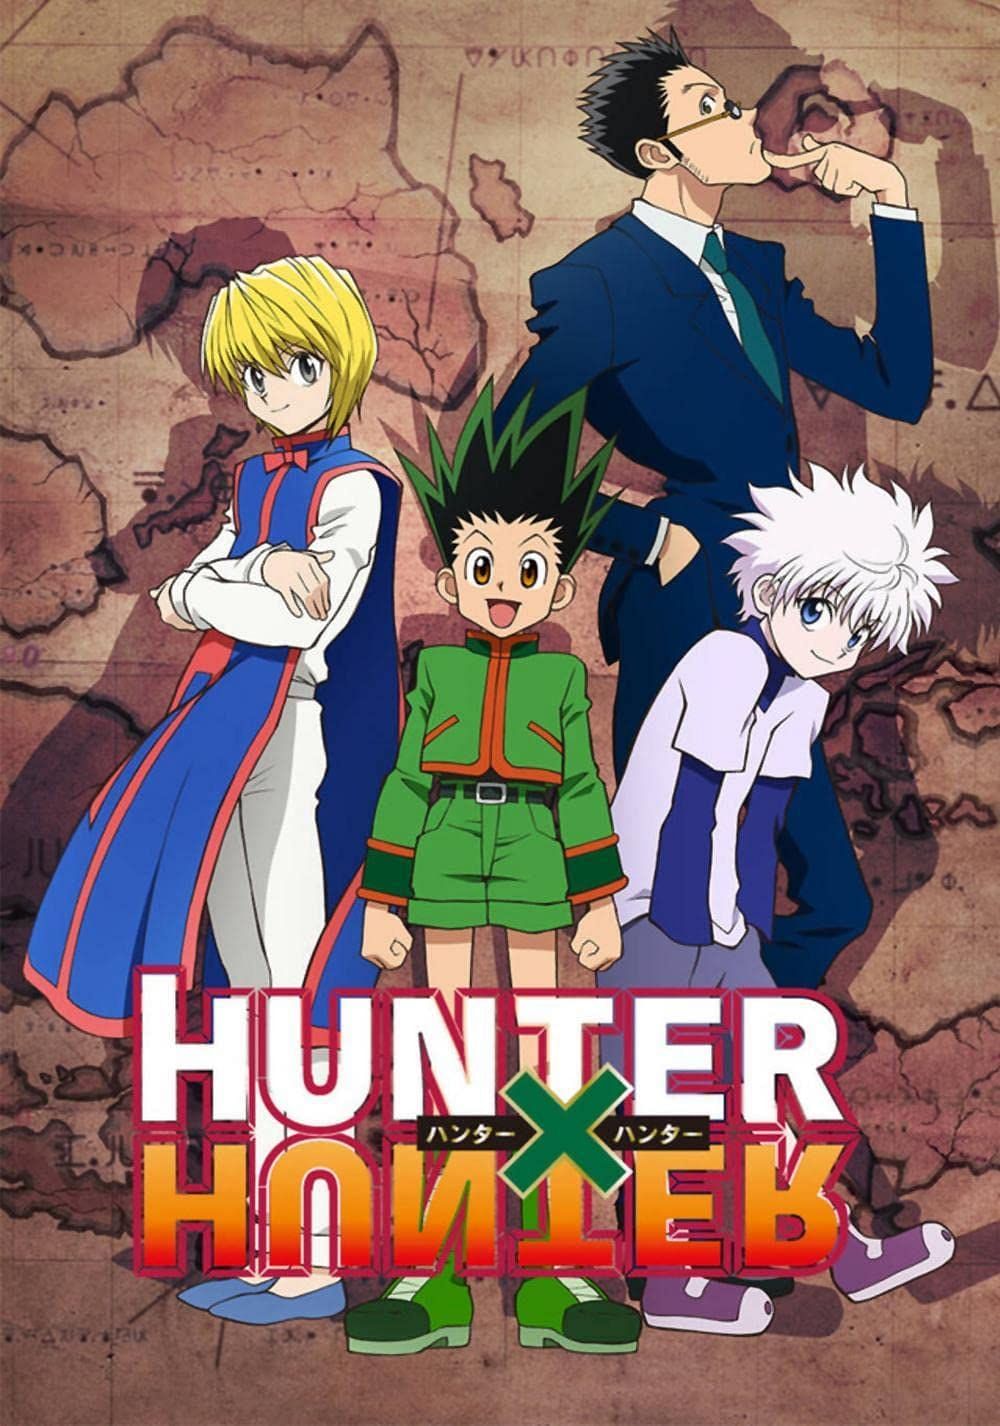 Hunter x Hunter (2011) Poster (Image via Madhouse)